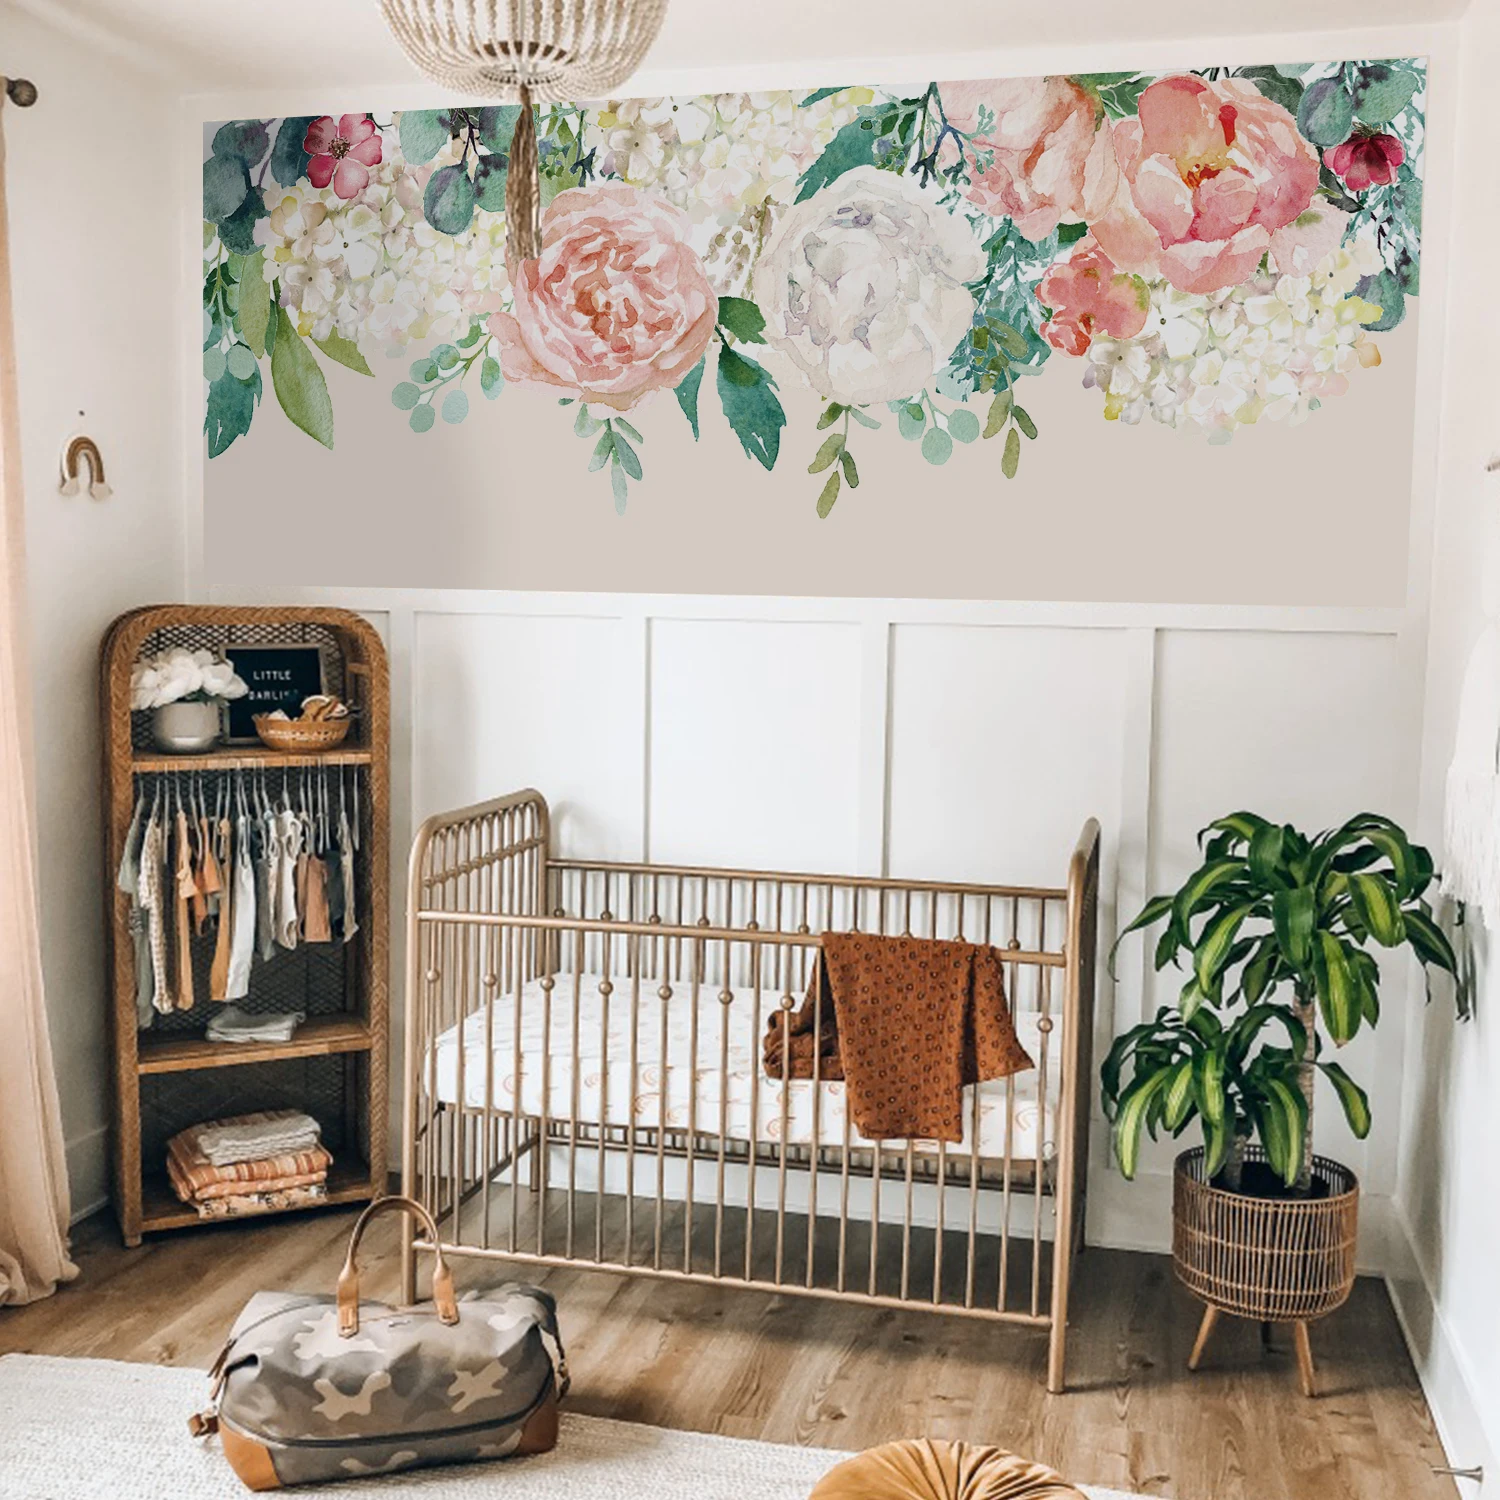 

Funlife® Fabric Bohemain Vintage Rose Garden Wall Border 6PCS Big Mural Peel and Stick Nursery Room Decorative Wall Stickers